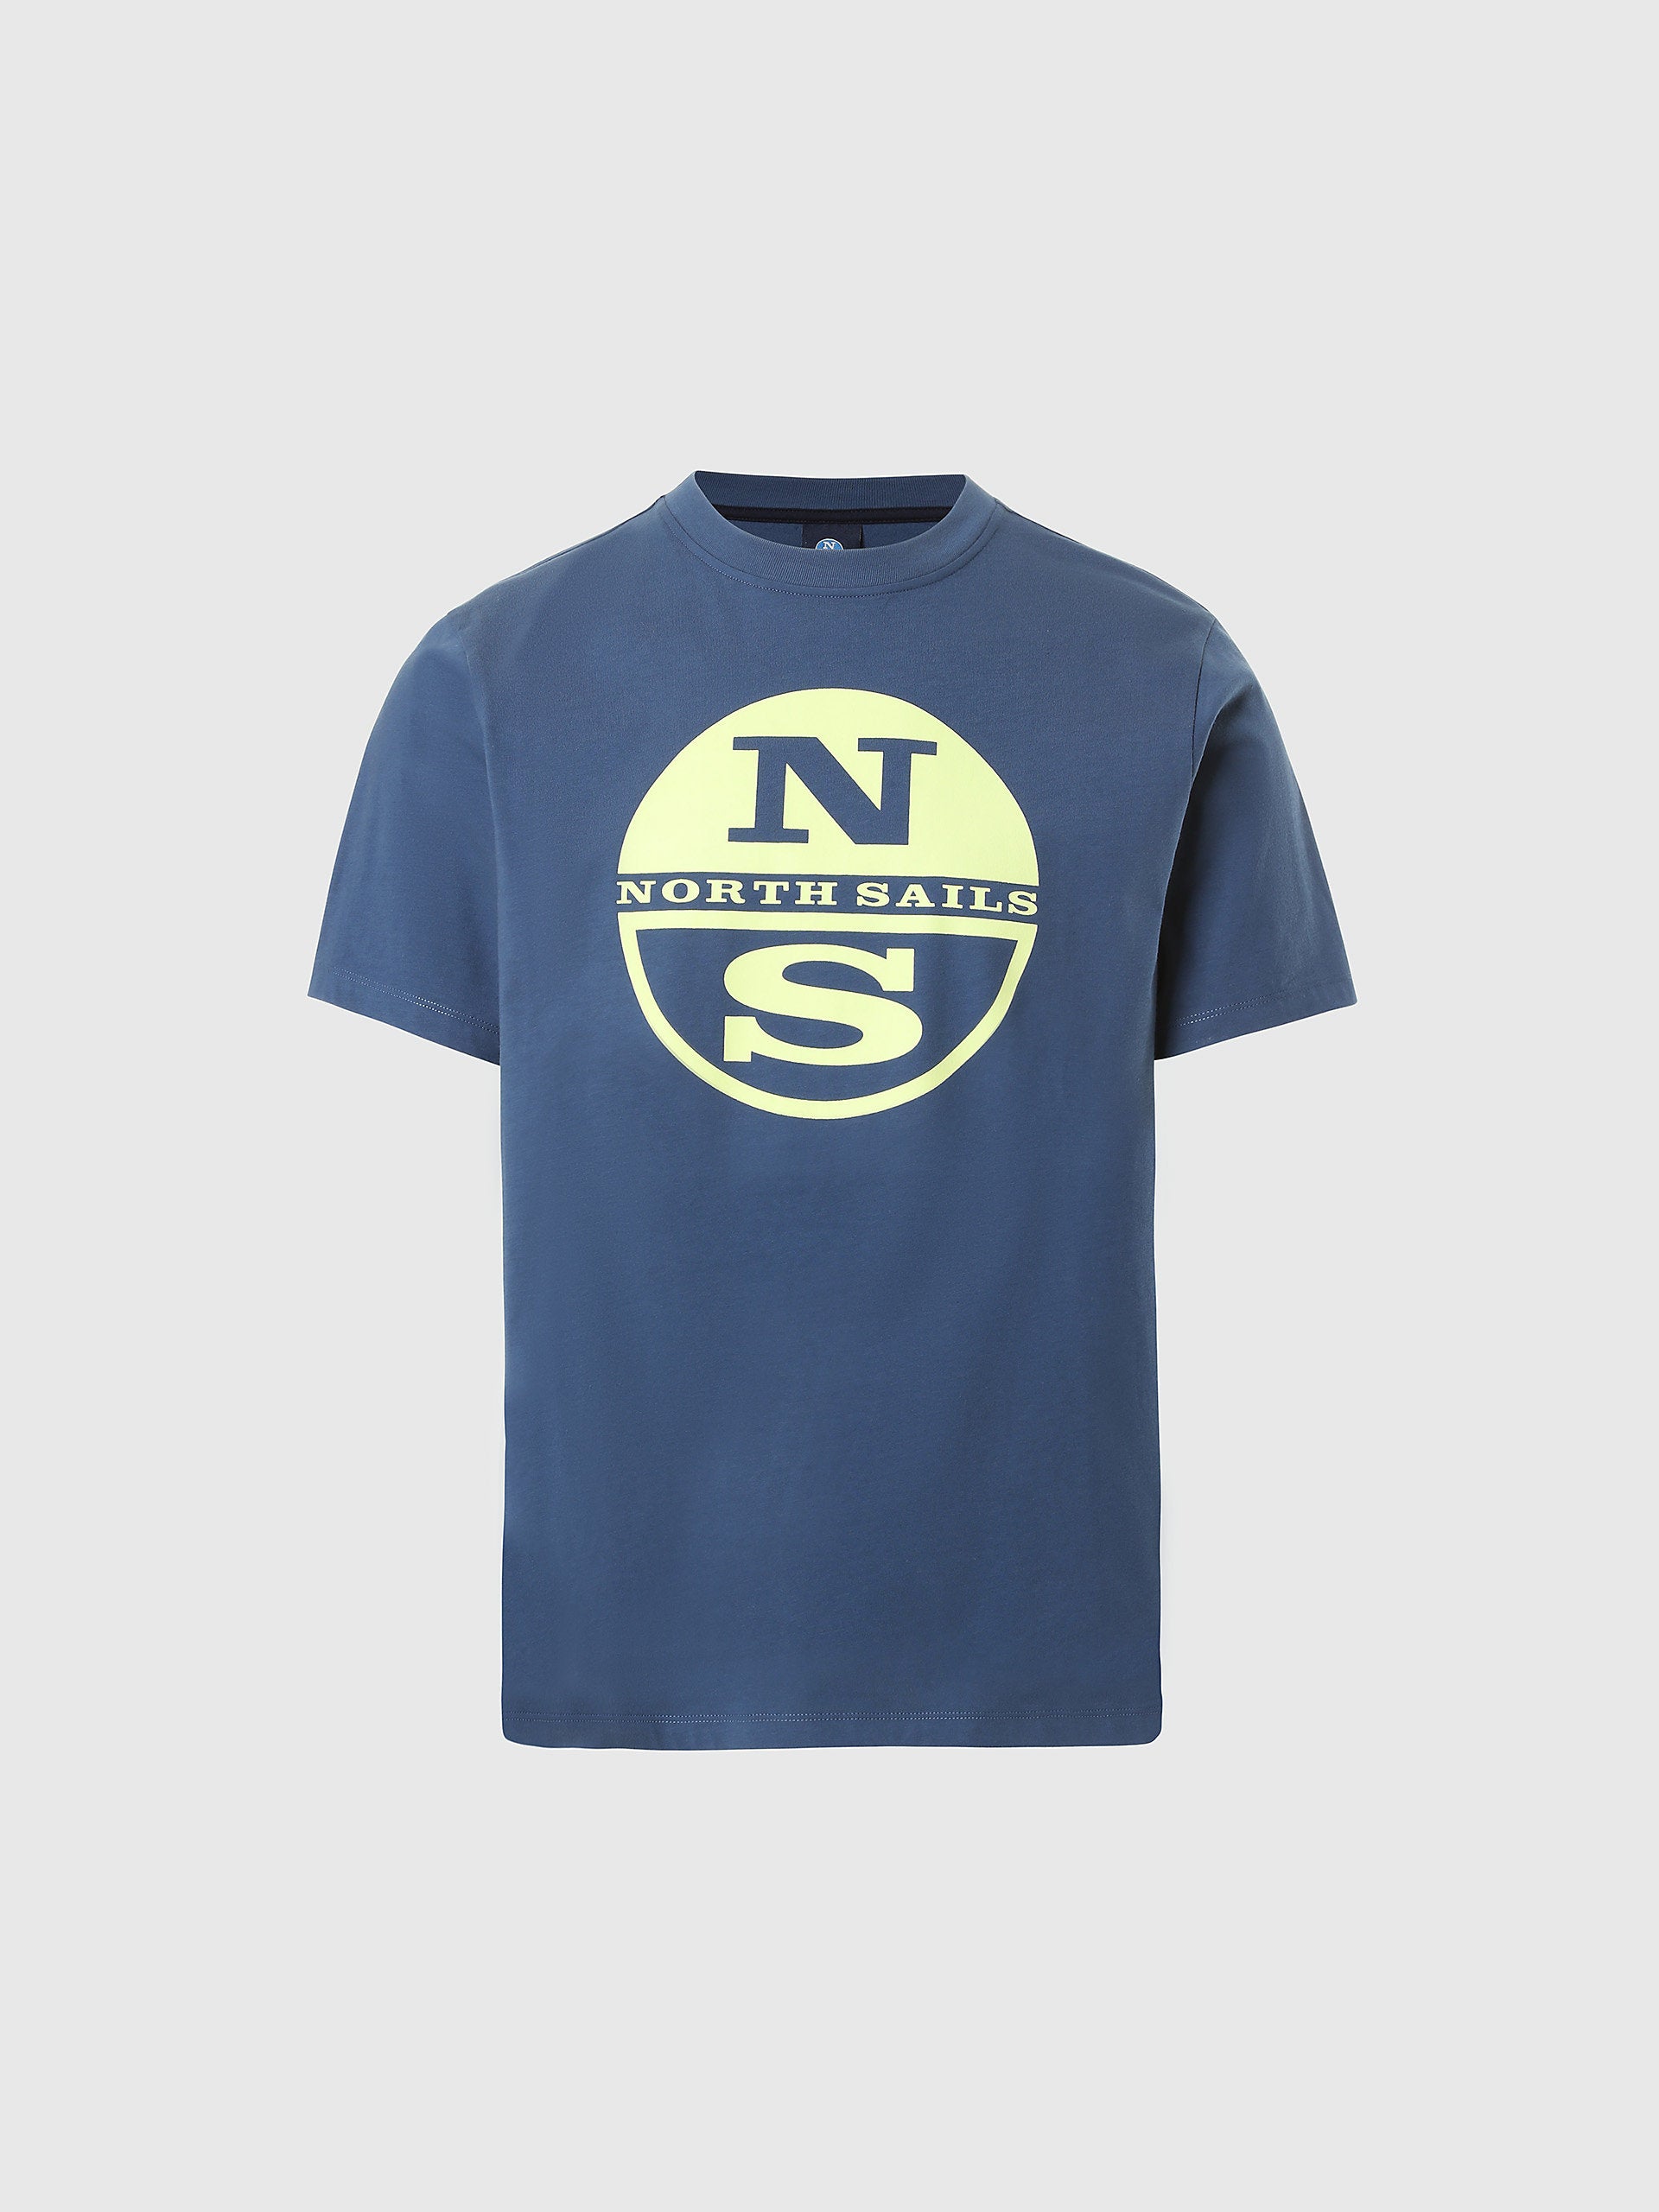 North Sails - T-shirt con stampa maxi logoNorth SailsDark denim4XL